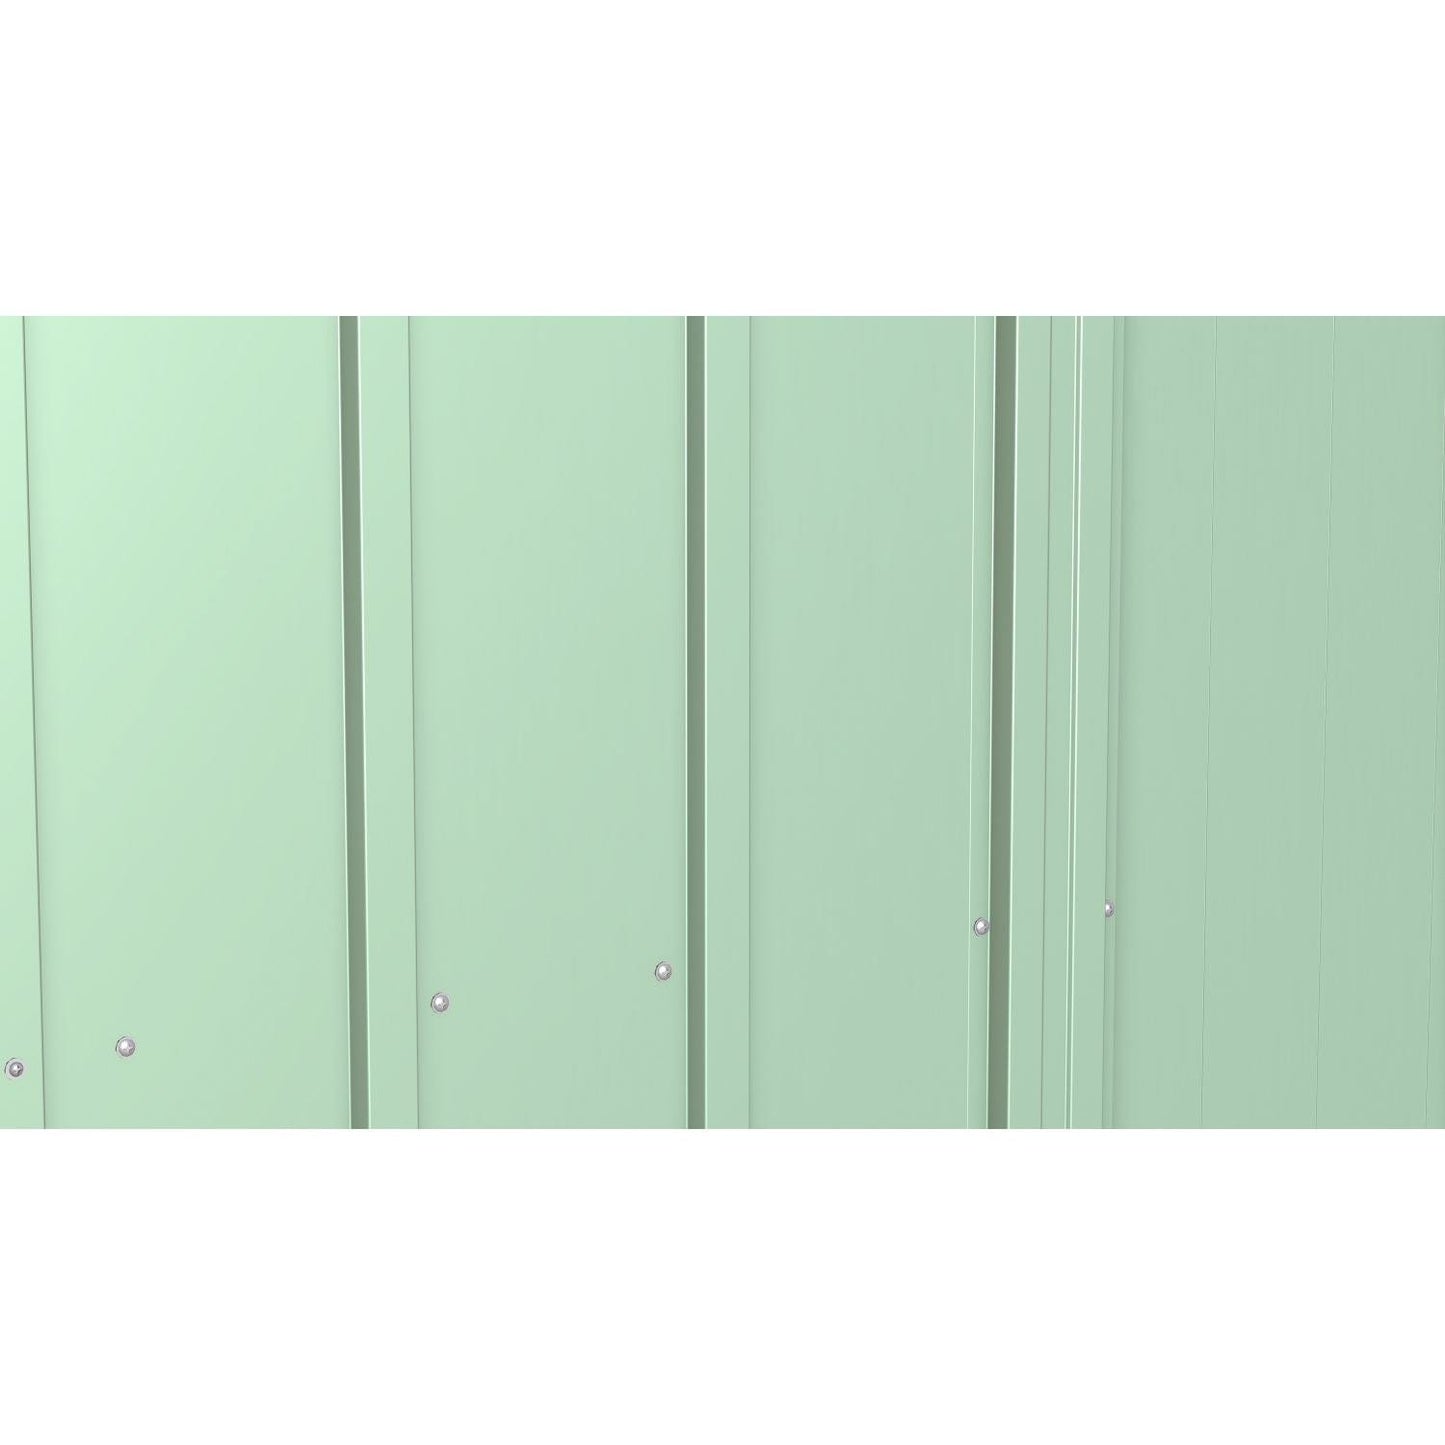 Arrow Metal Storage Shed Kit Arrow | Classic Steel Storage Shed, 8x8 ft., Sage Green CLG88SG